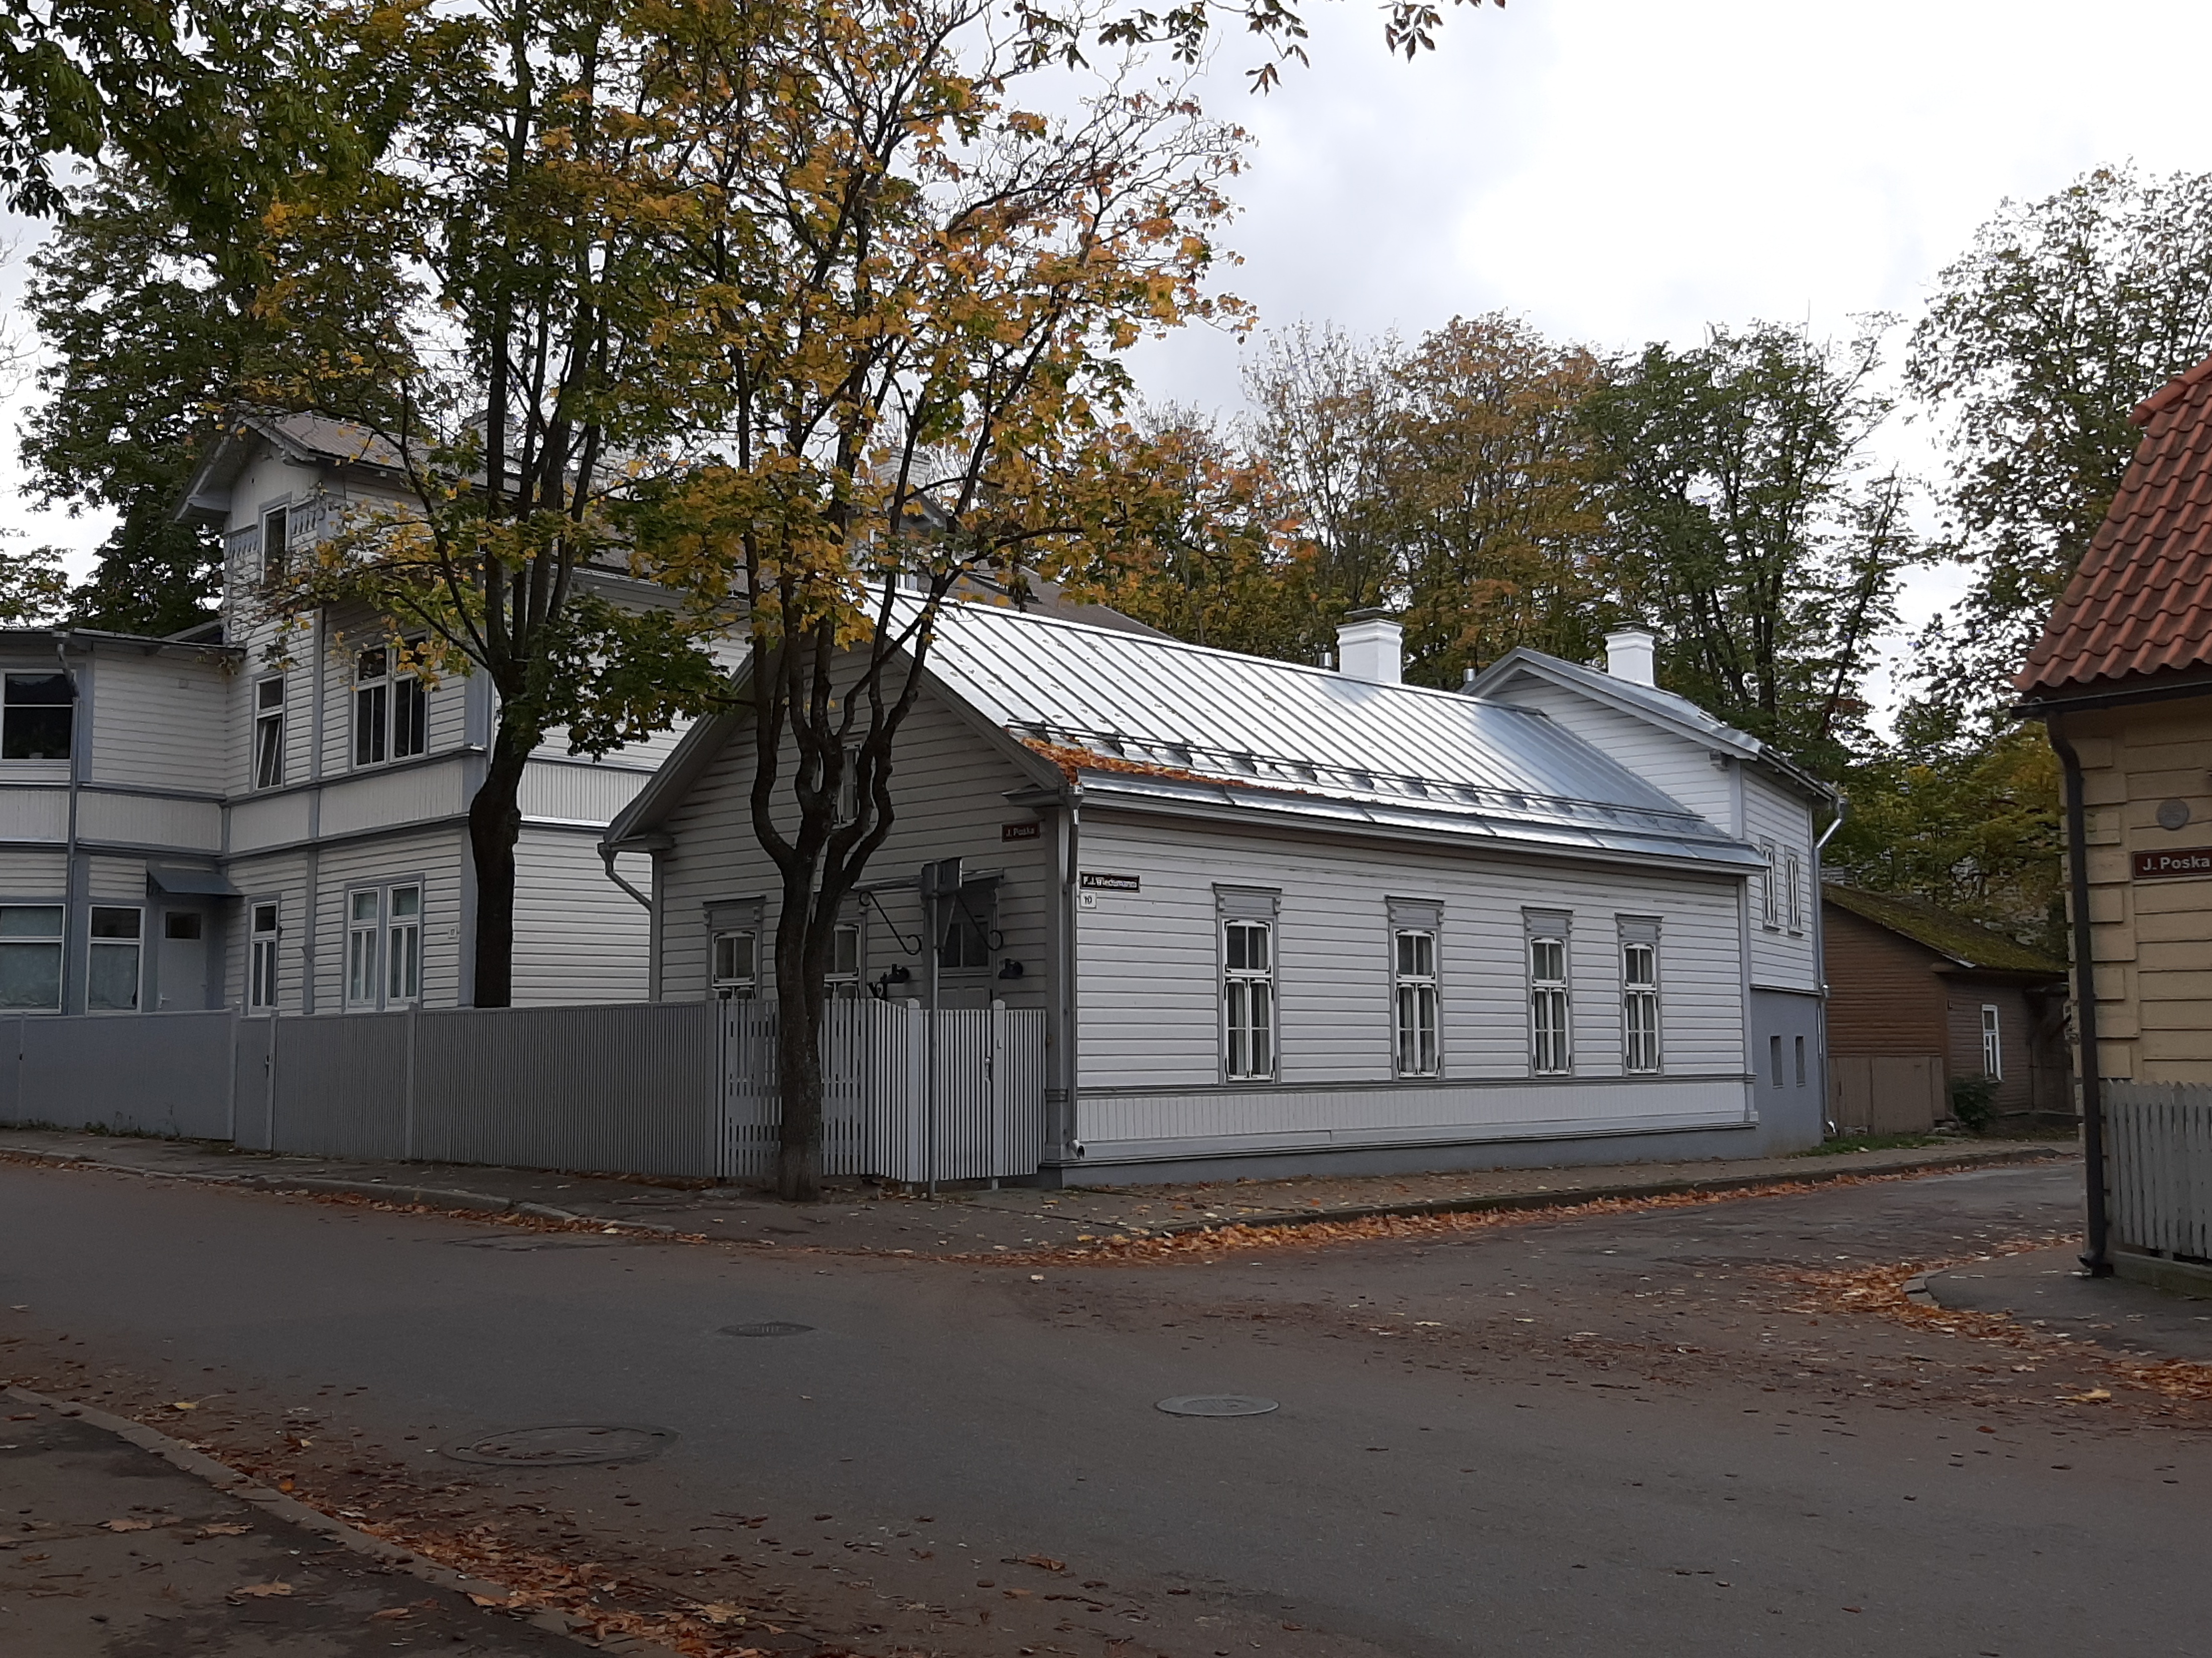 Former residence of f. J. Wiedemann in Tallinn at the corner of J. Poska and f. J. Wiedemann Street rephoto